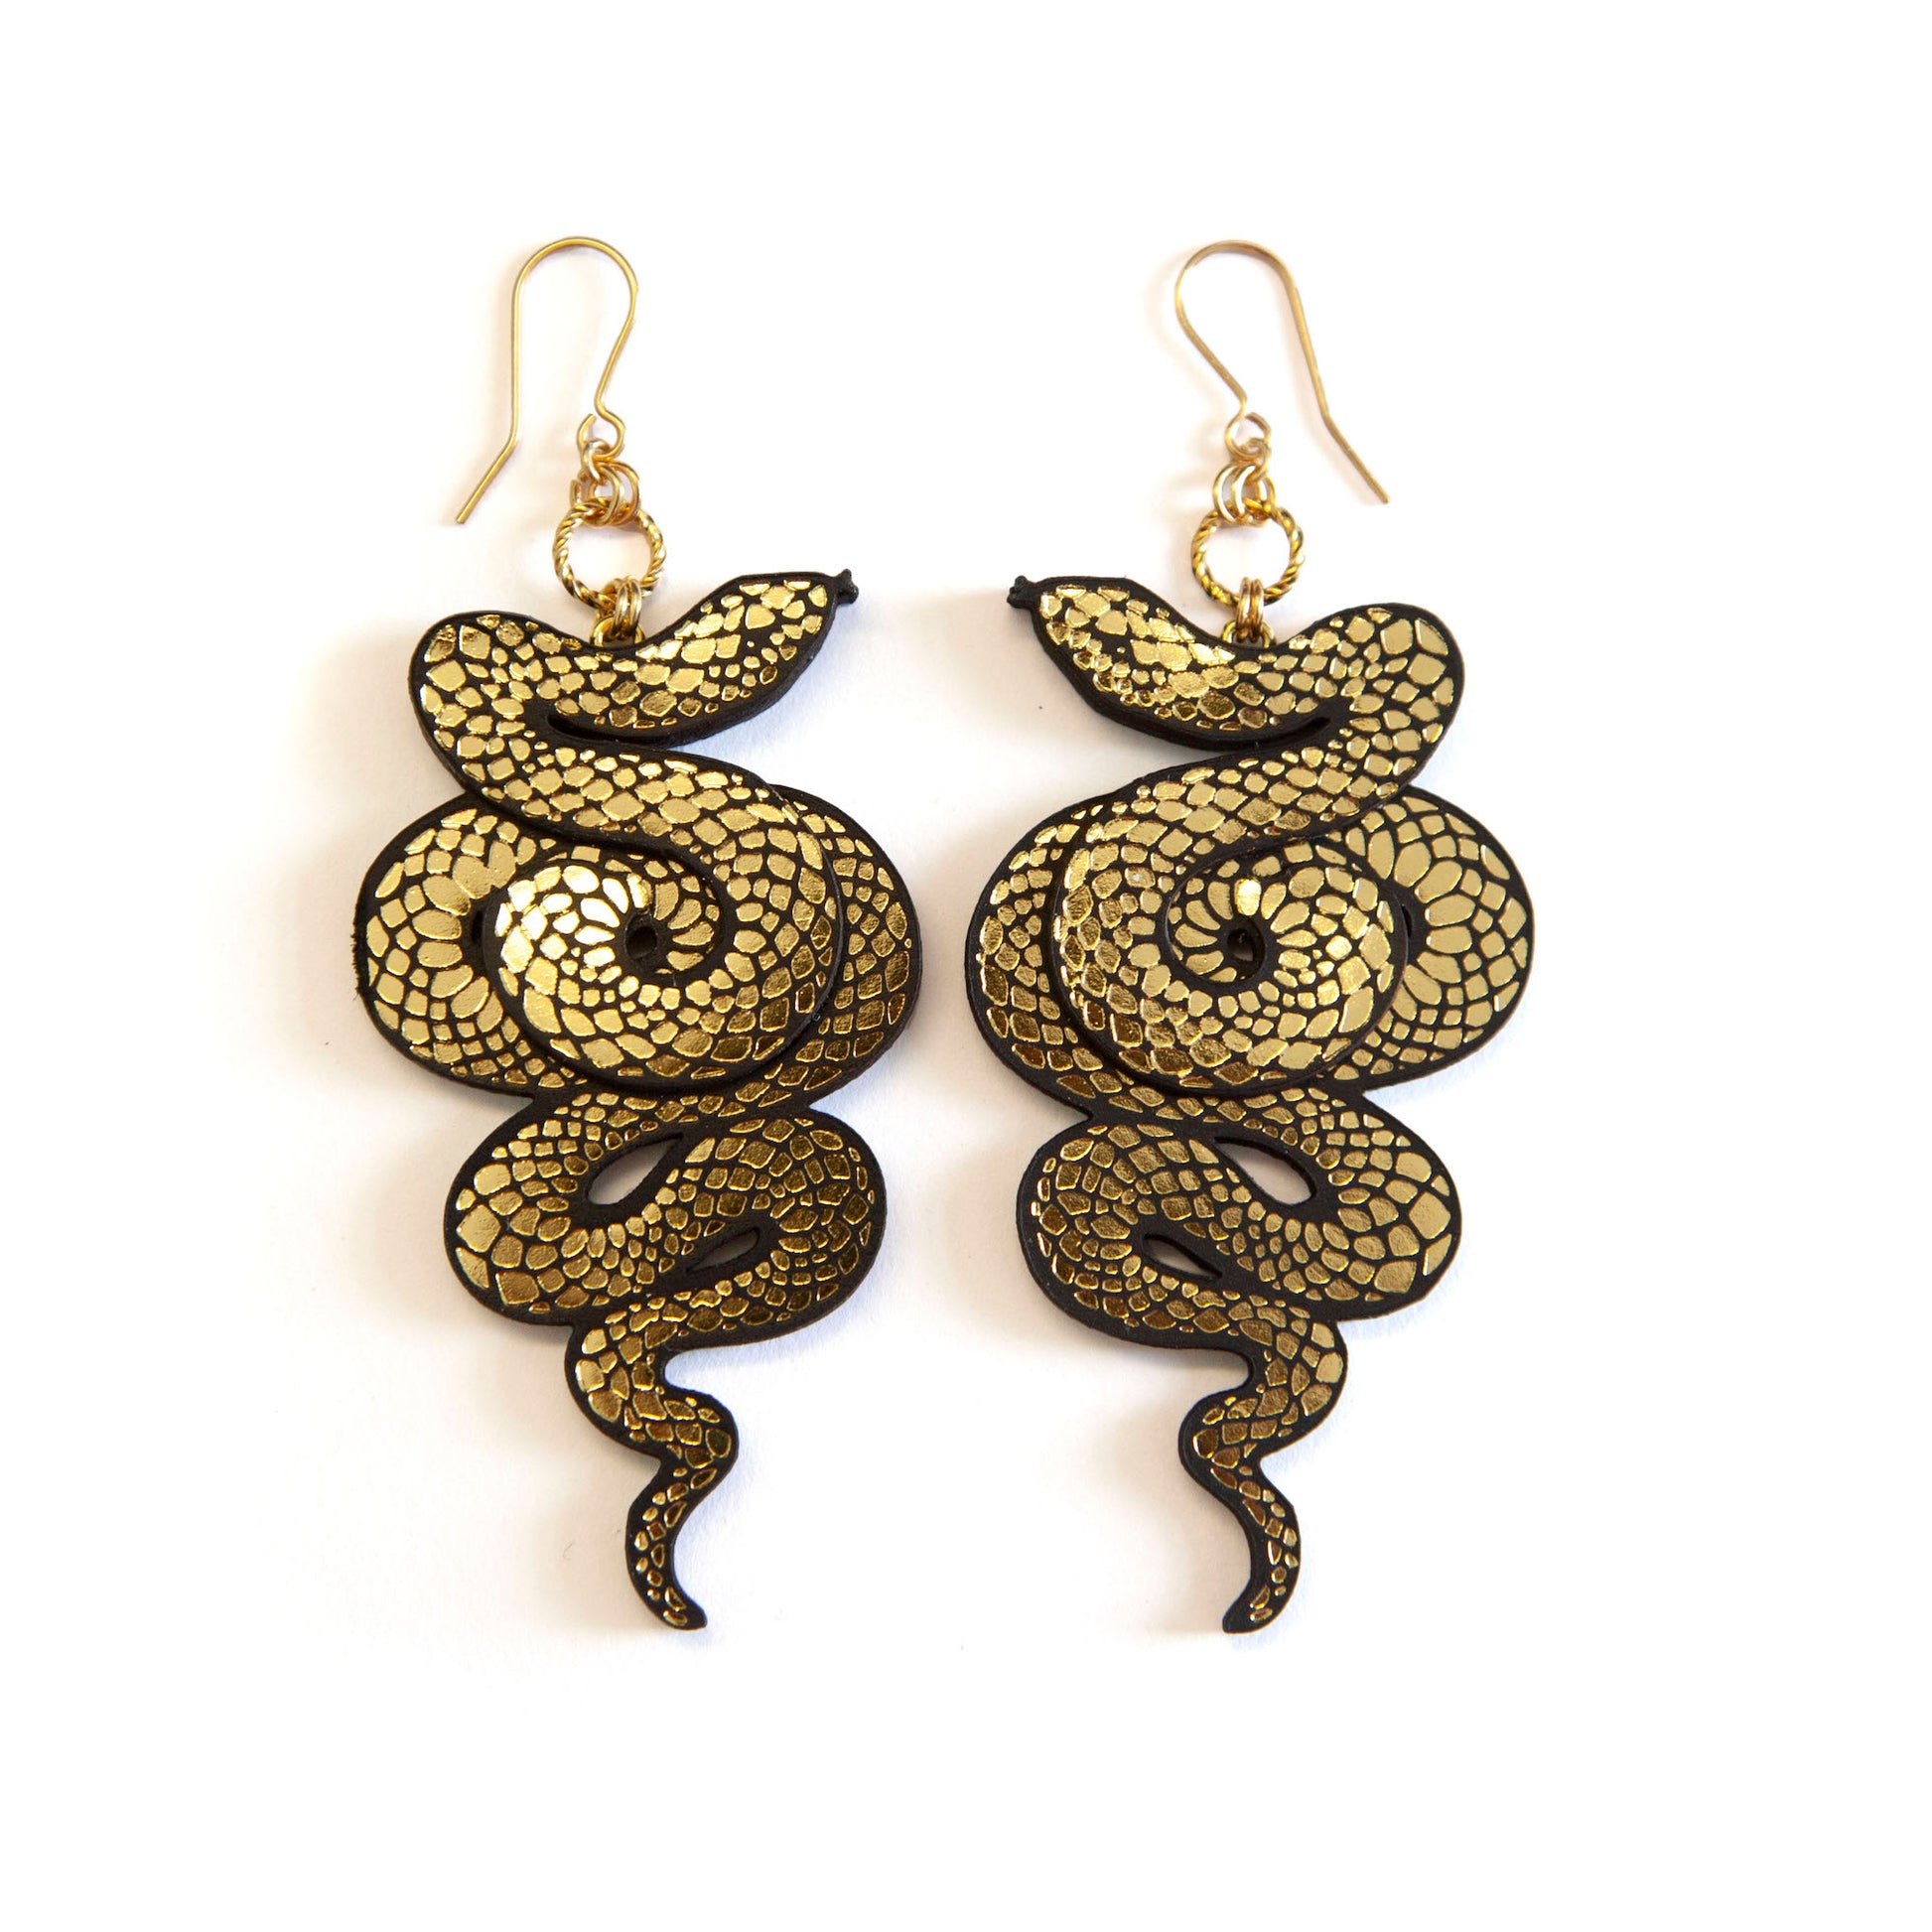  black & gold leather serpent earrings